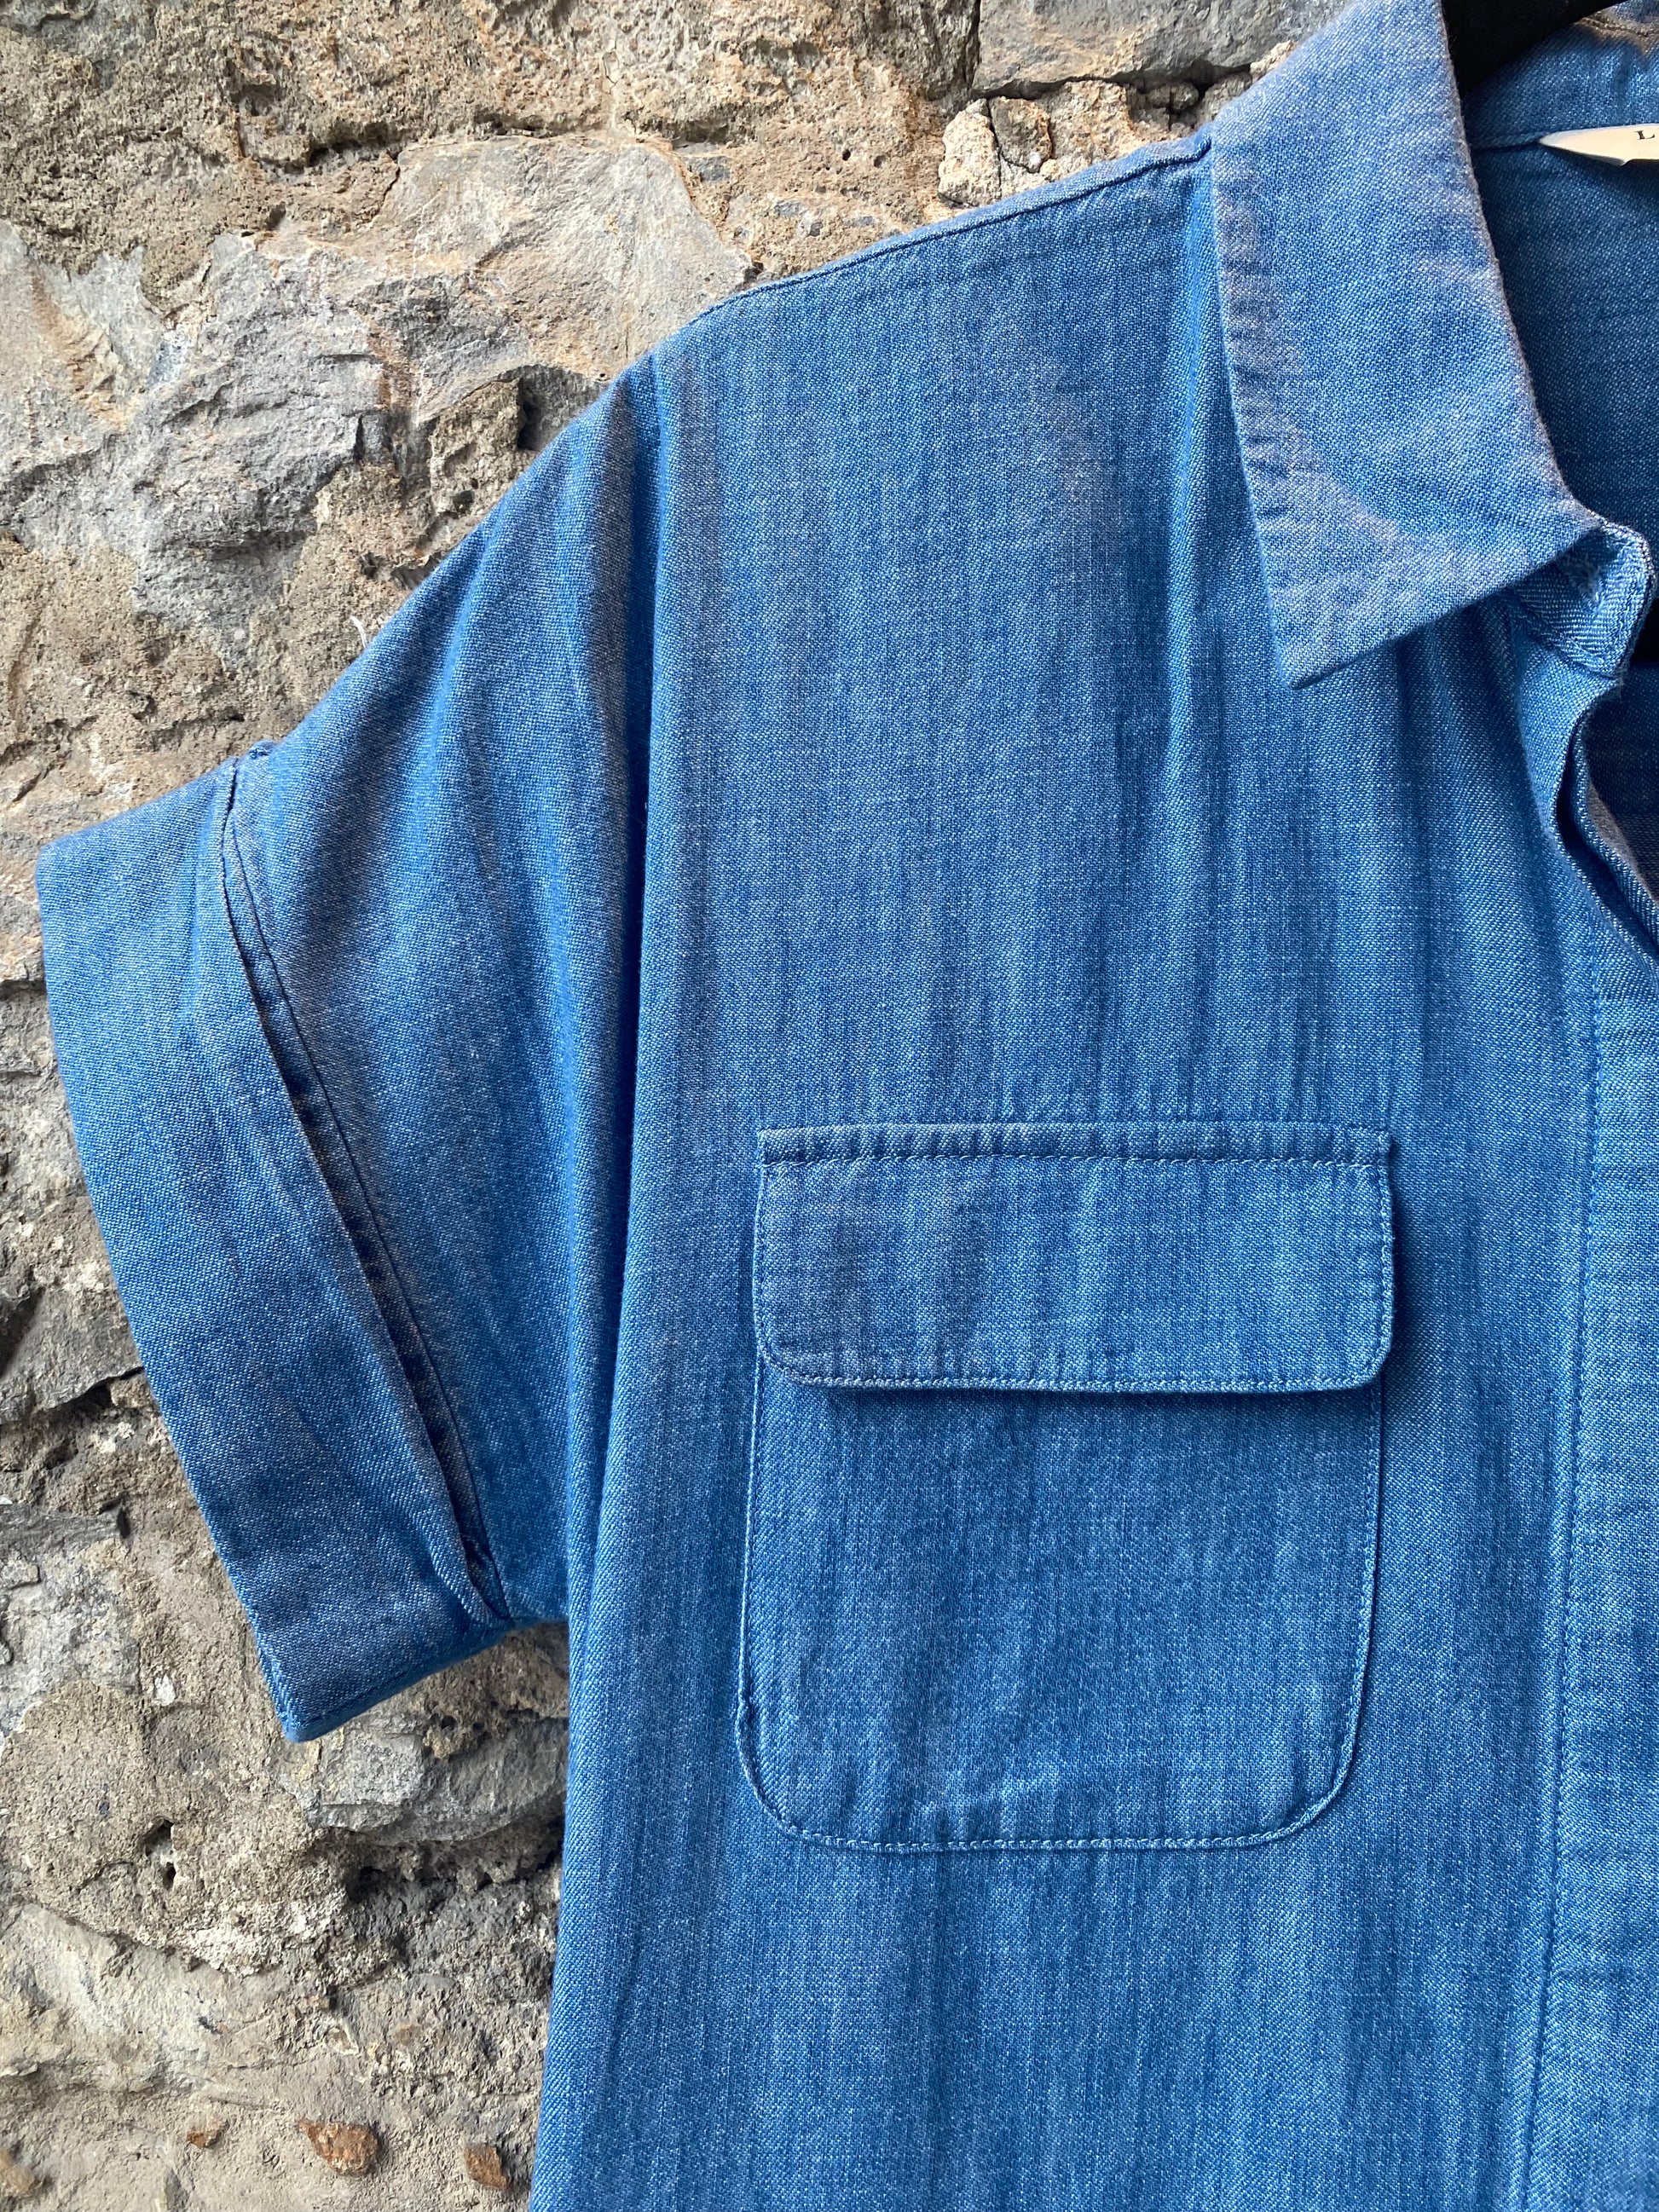 100% Cotton  Denim Shirt Dress - Light Blue/ Chambray